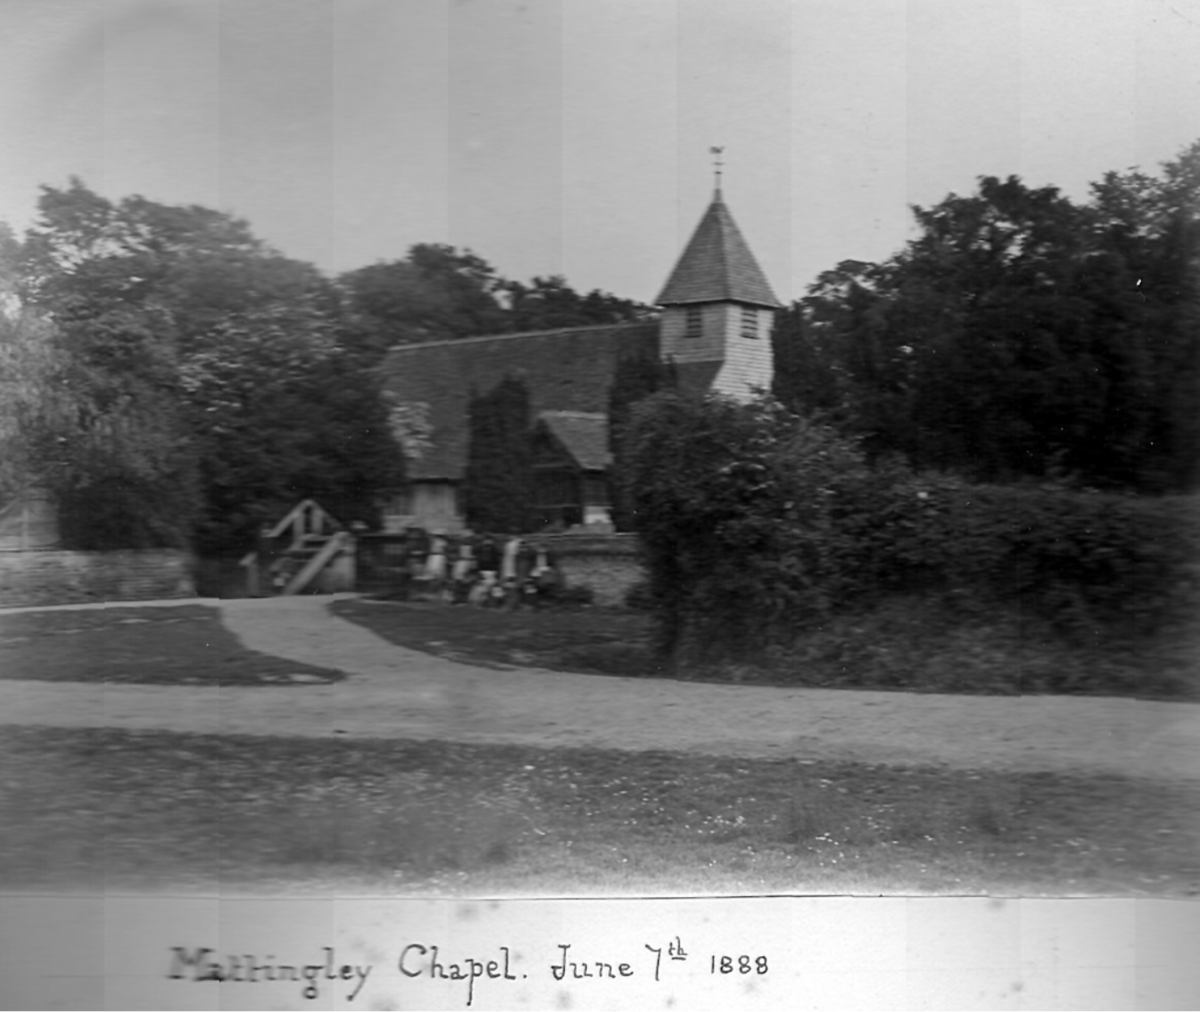 Mattingley Chapel 1888